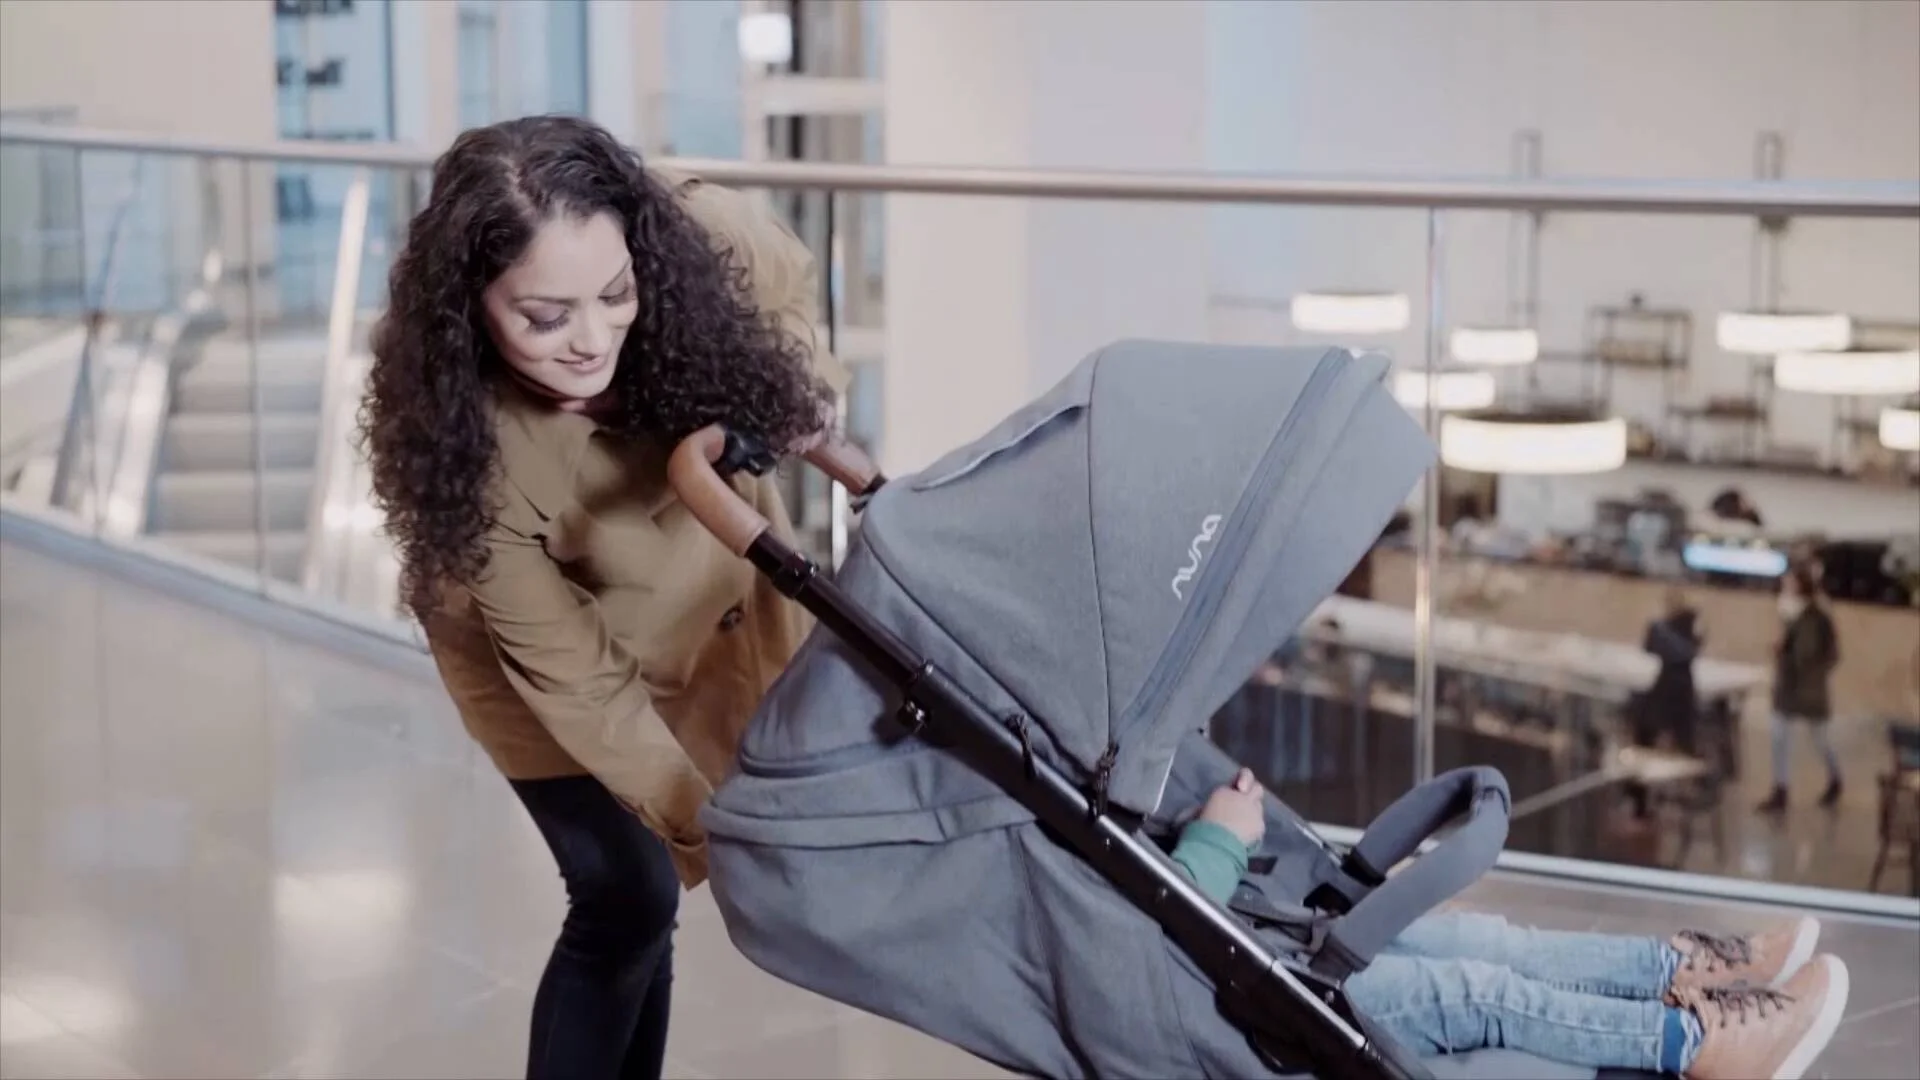 2019 tavo stroller & pipa lite lx car seat travel system